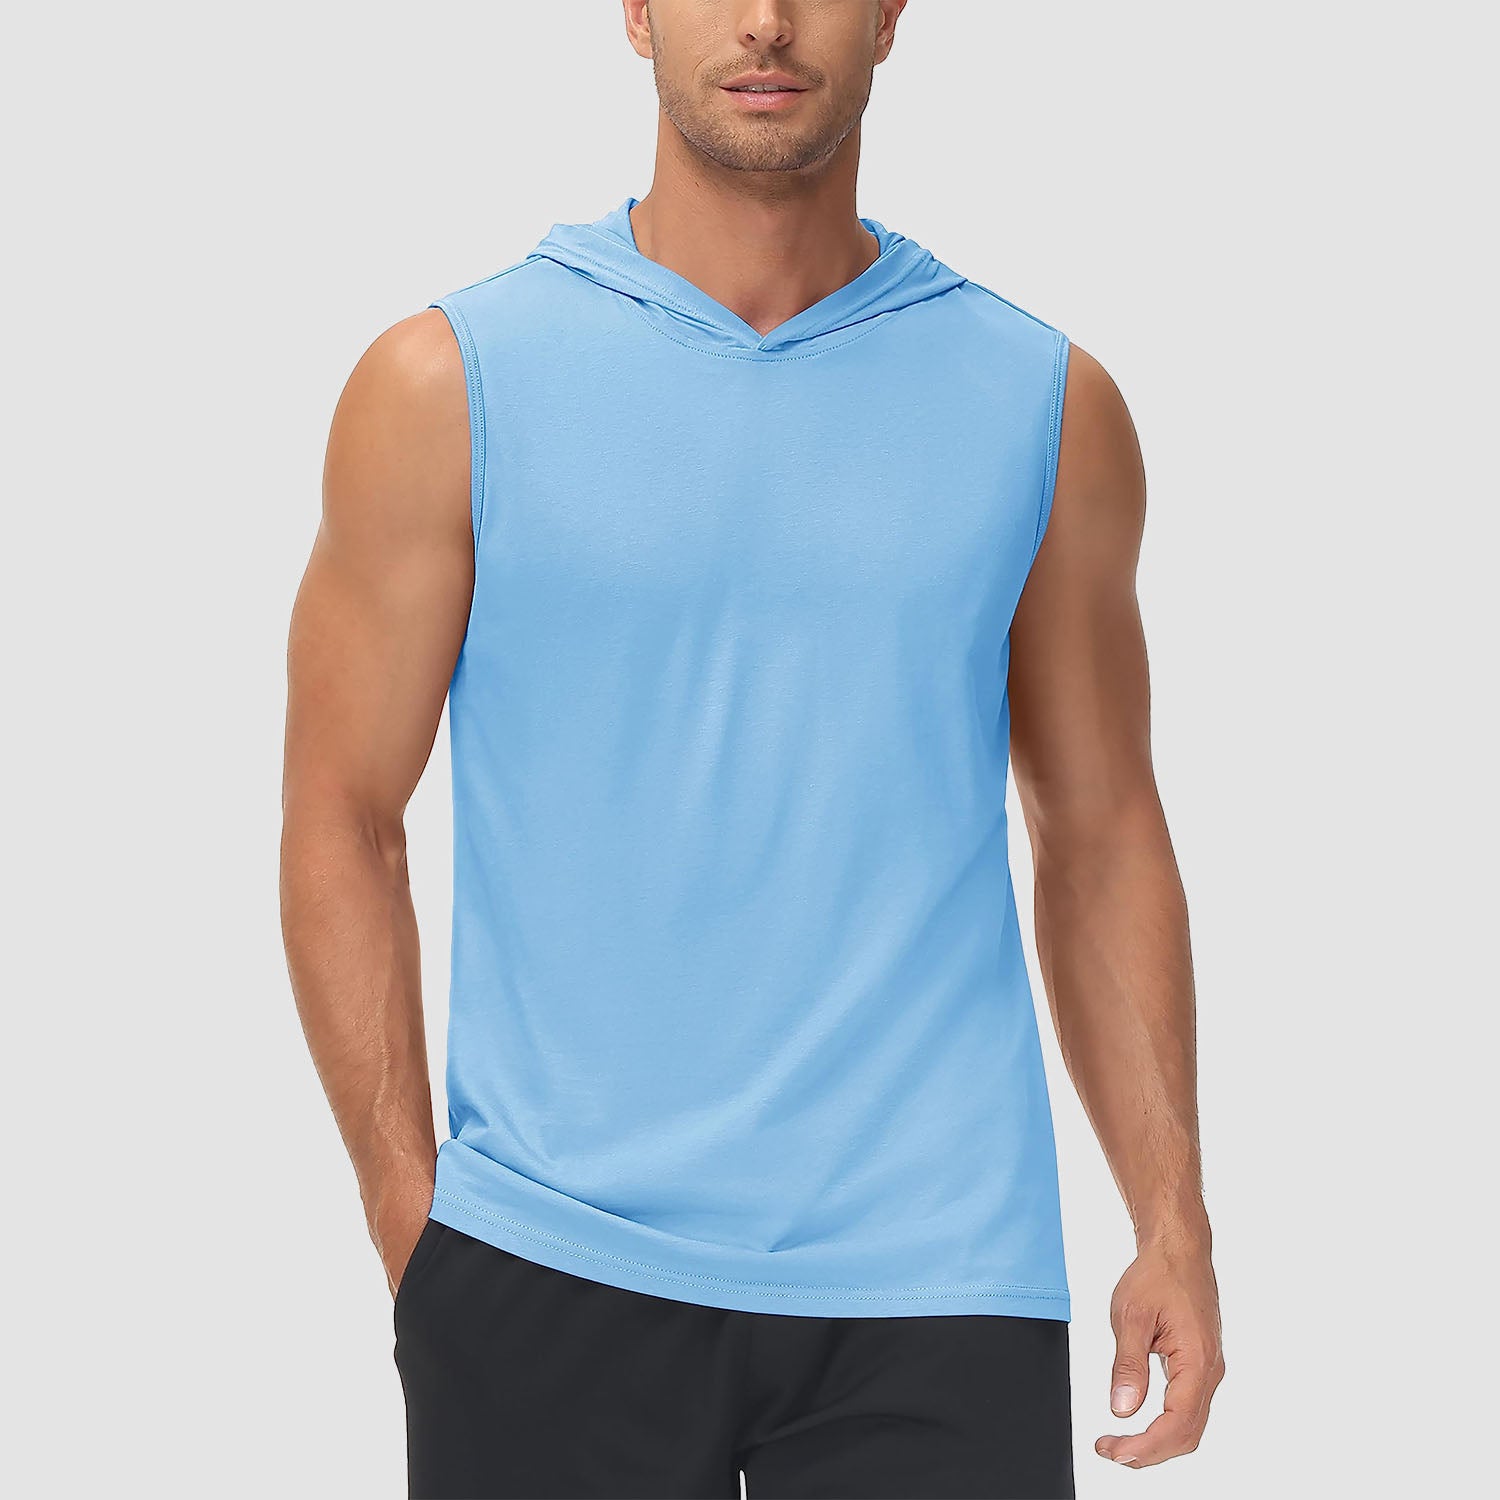 Men's Hooded Tank Tops Sleeveless Cotton Hoodie Summer Casual Shirt